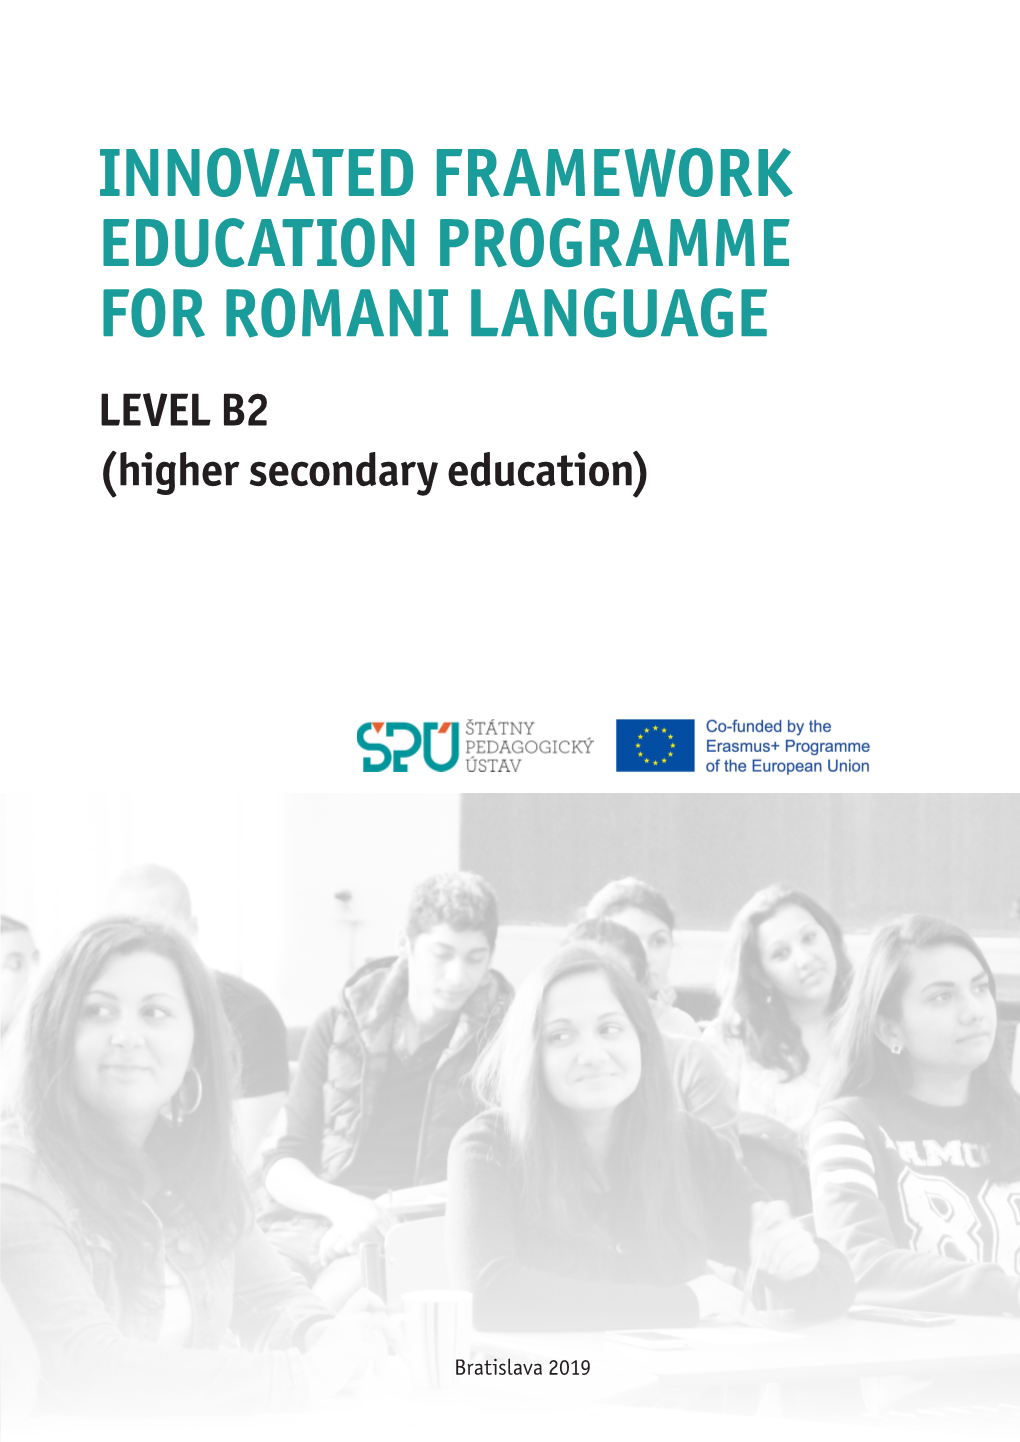 INNOVATED FRAMEWORK EDUCATION PROGRAMME for ROMANI LANGUAGE LEVEL B2 (Higher Secondary Education)